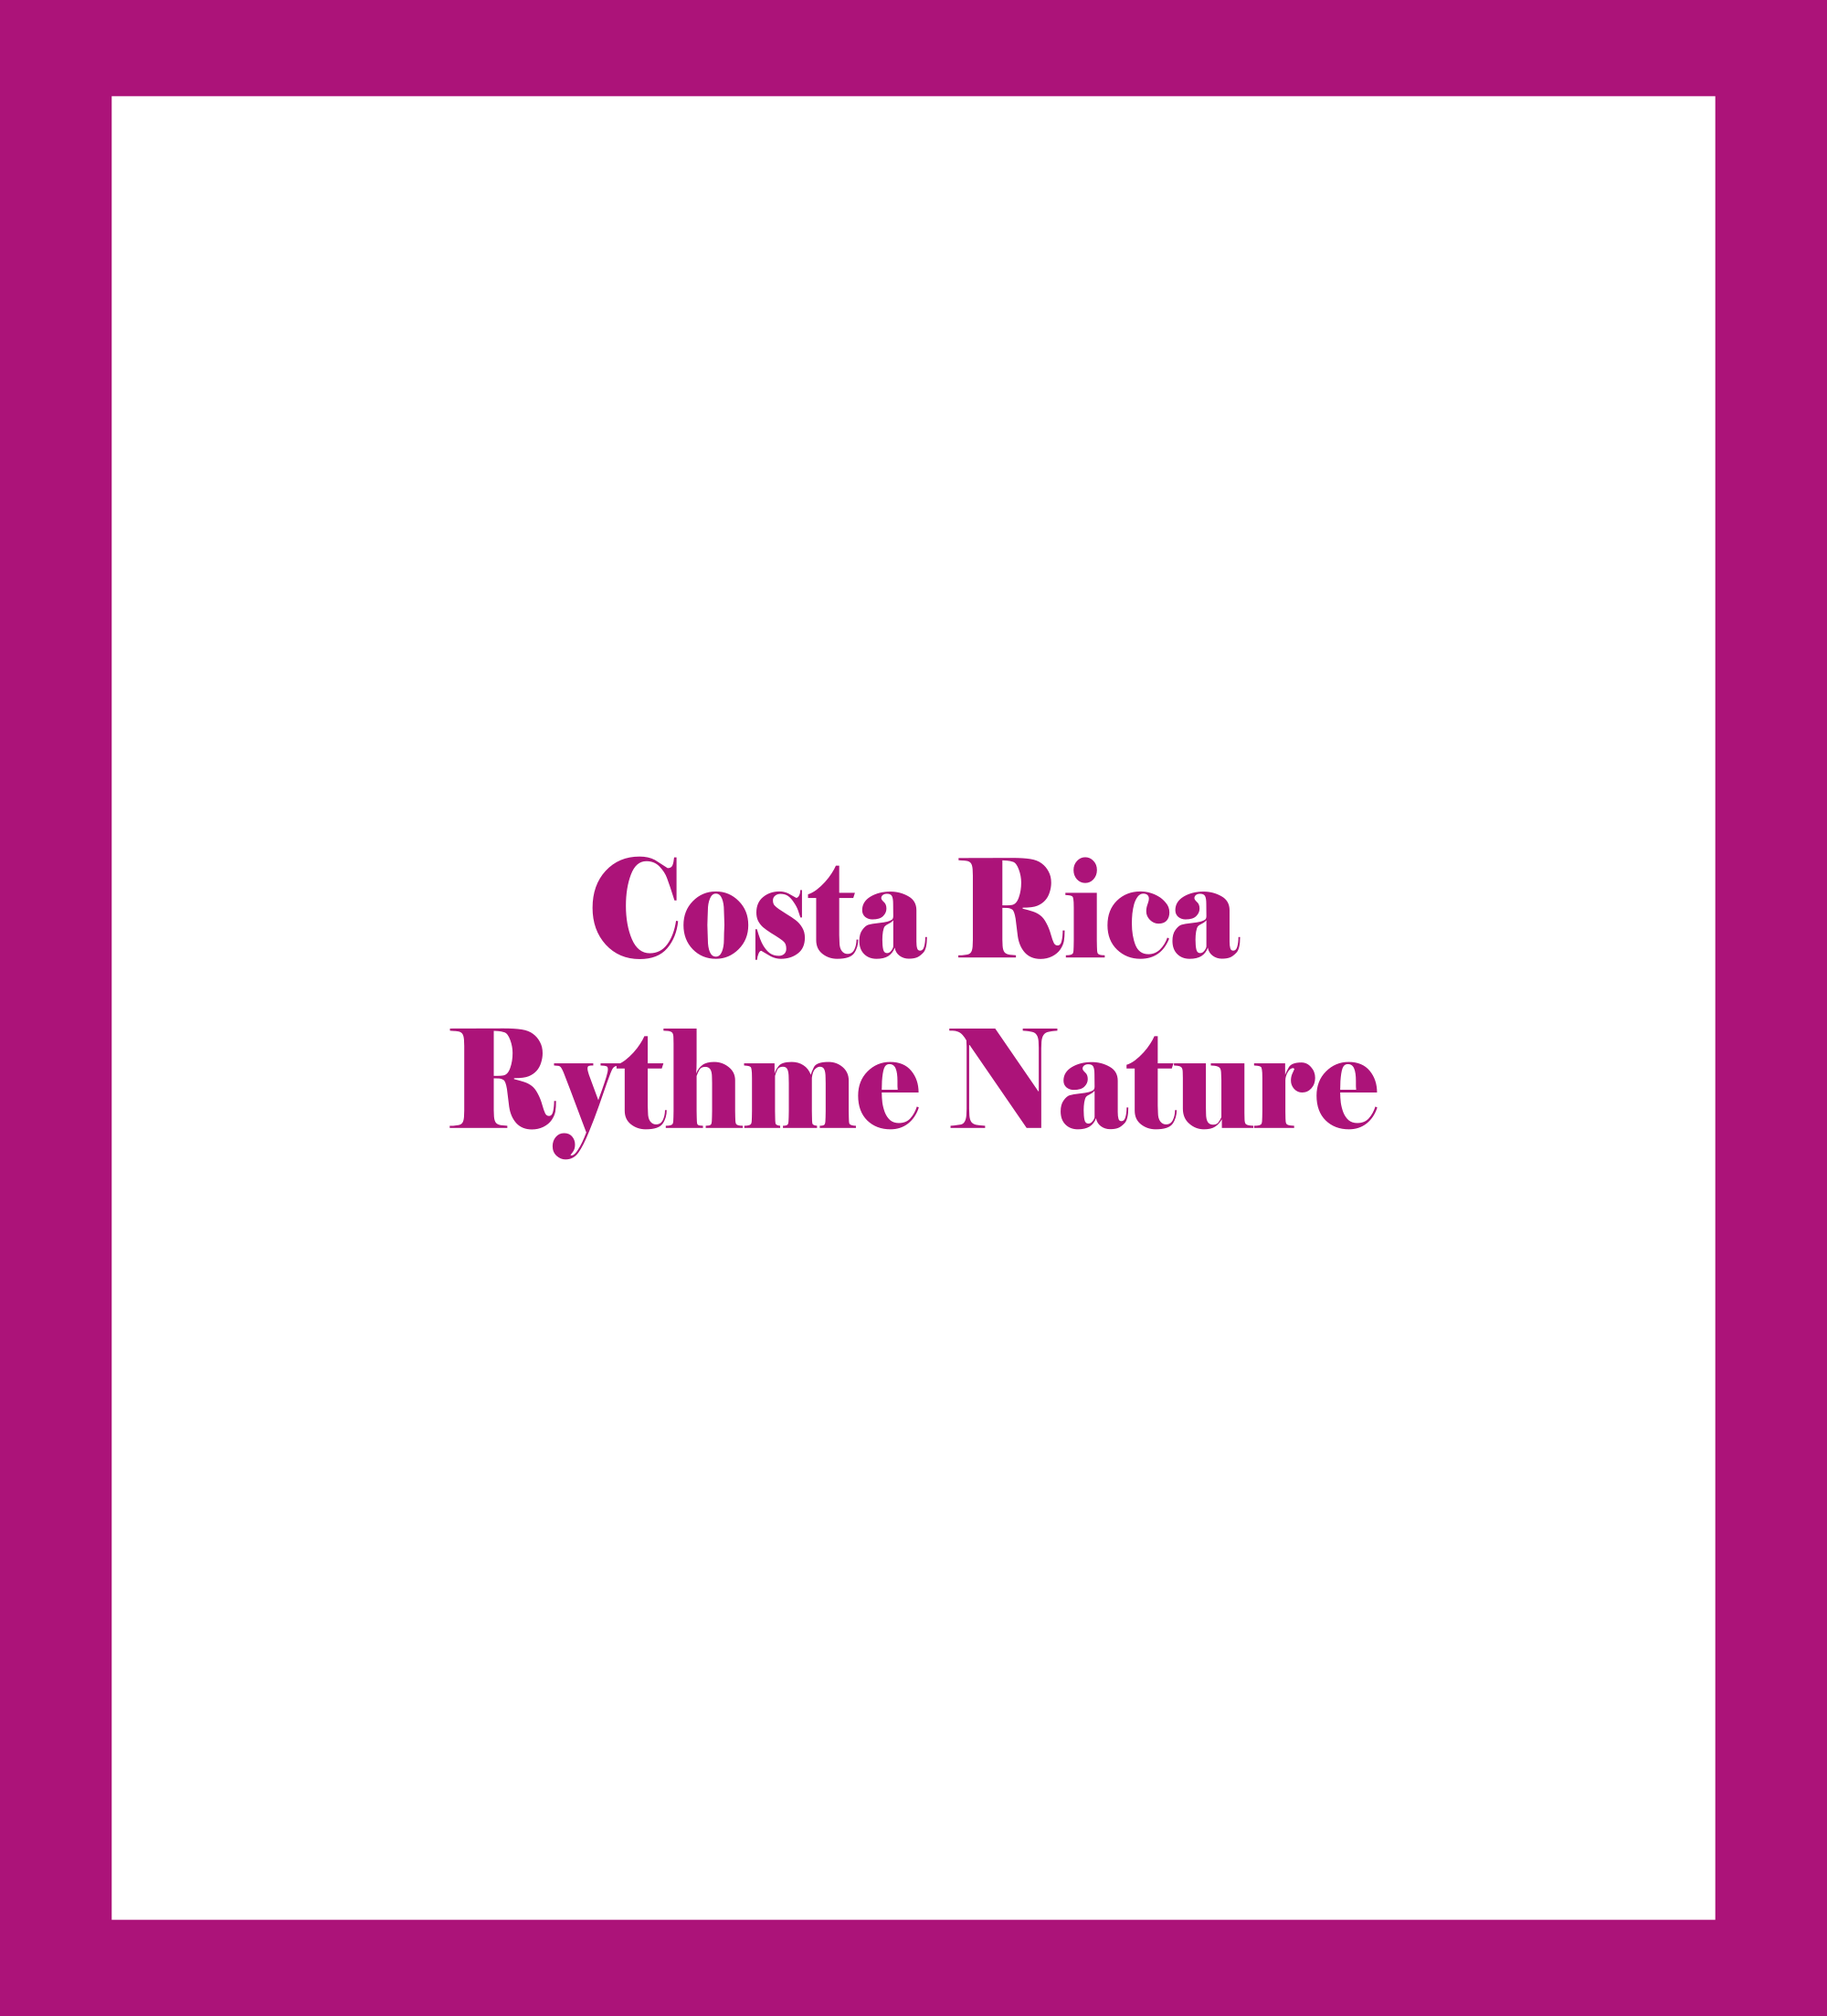 Caratula de Costa Rica Rythme Nature (Descubrir el mundo) 